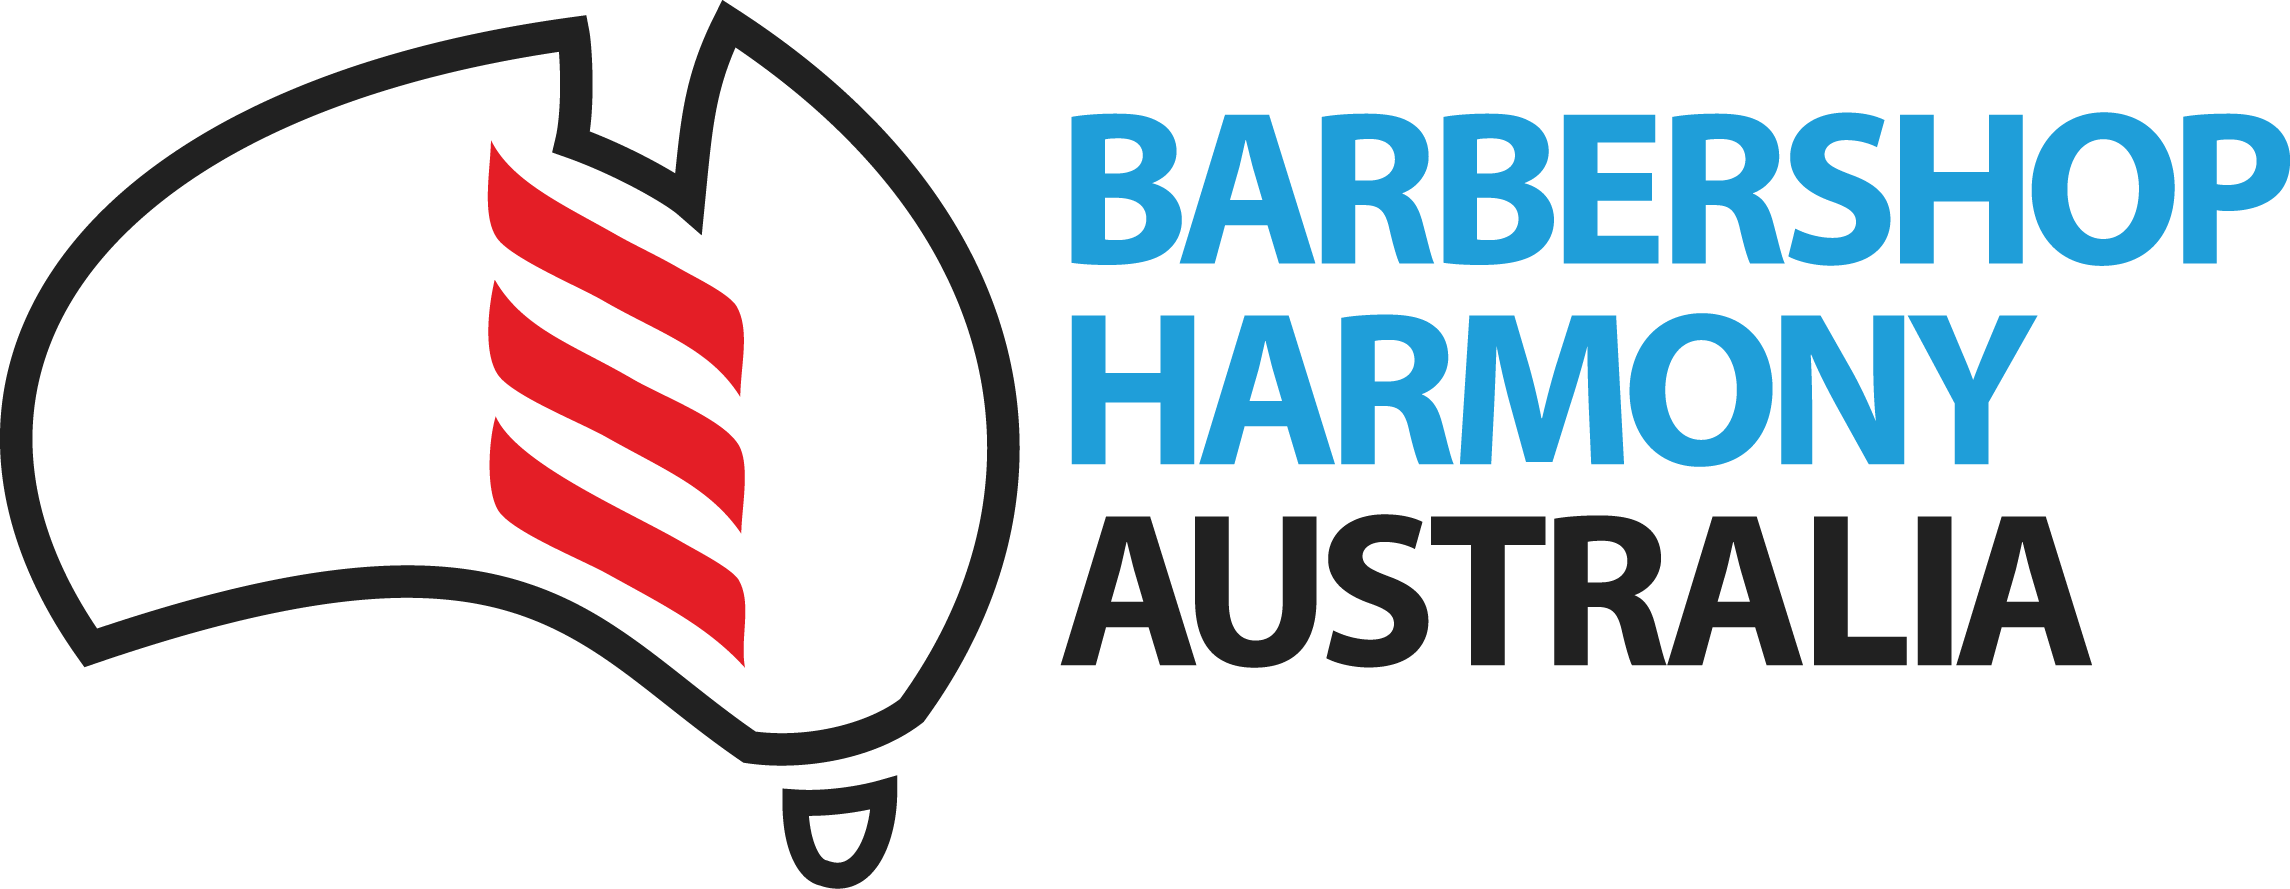 Barbershop Harmony Australia - Logos